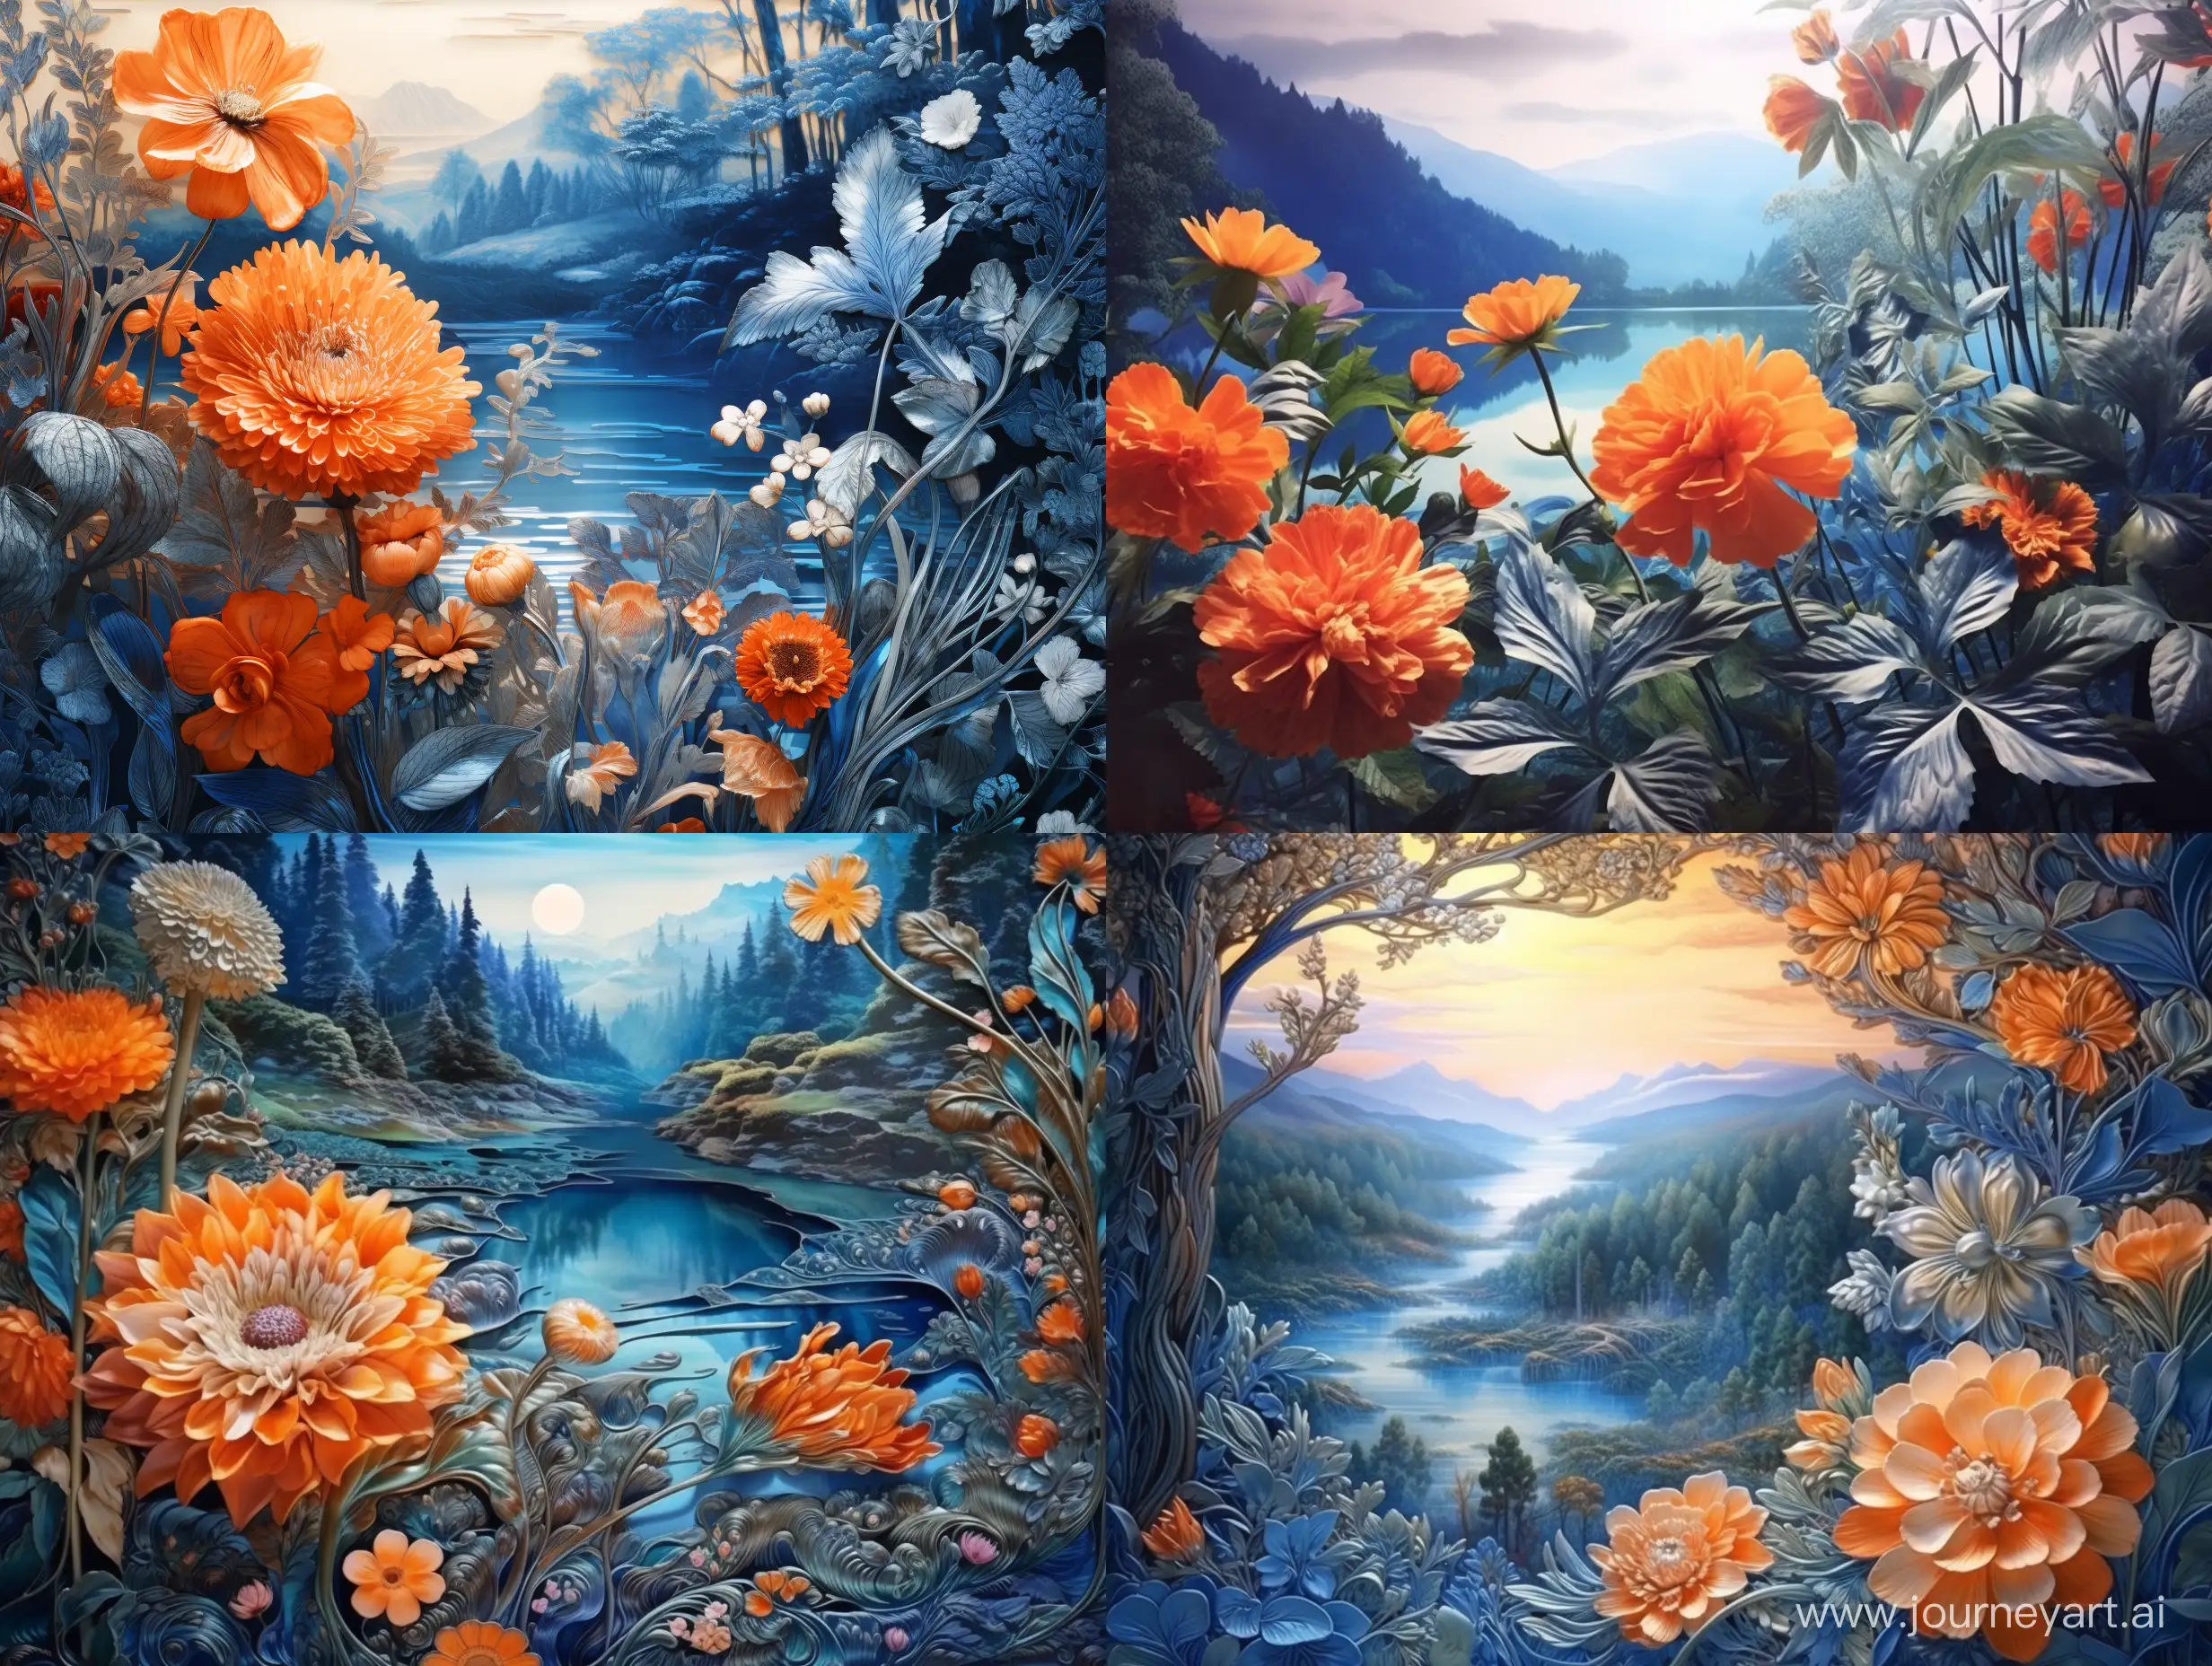 Vivid-Blue-Forest-Landscape-with-Orange-Sun-and-Rainbow